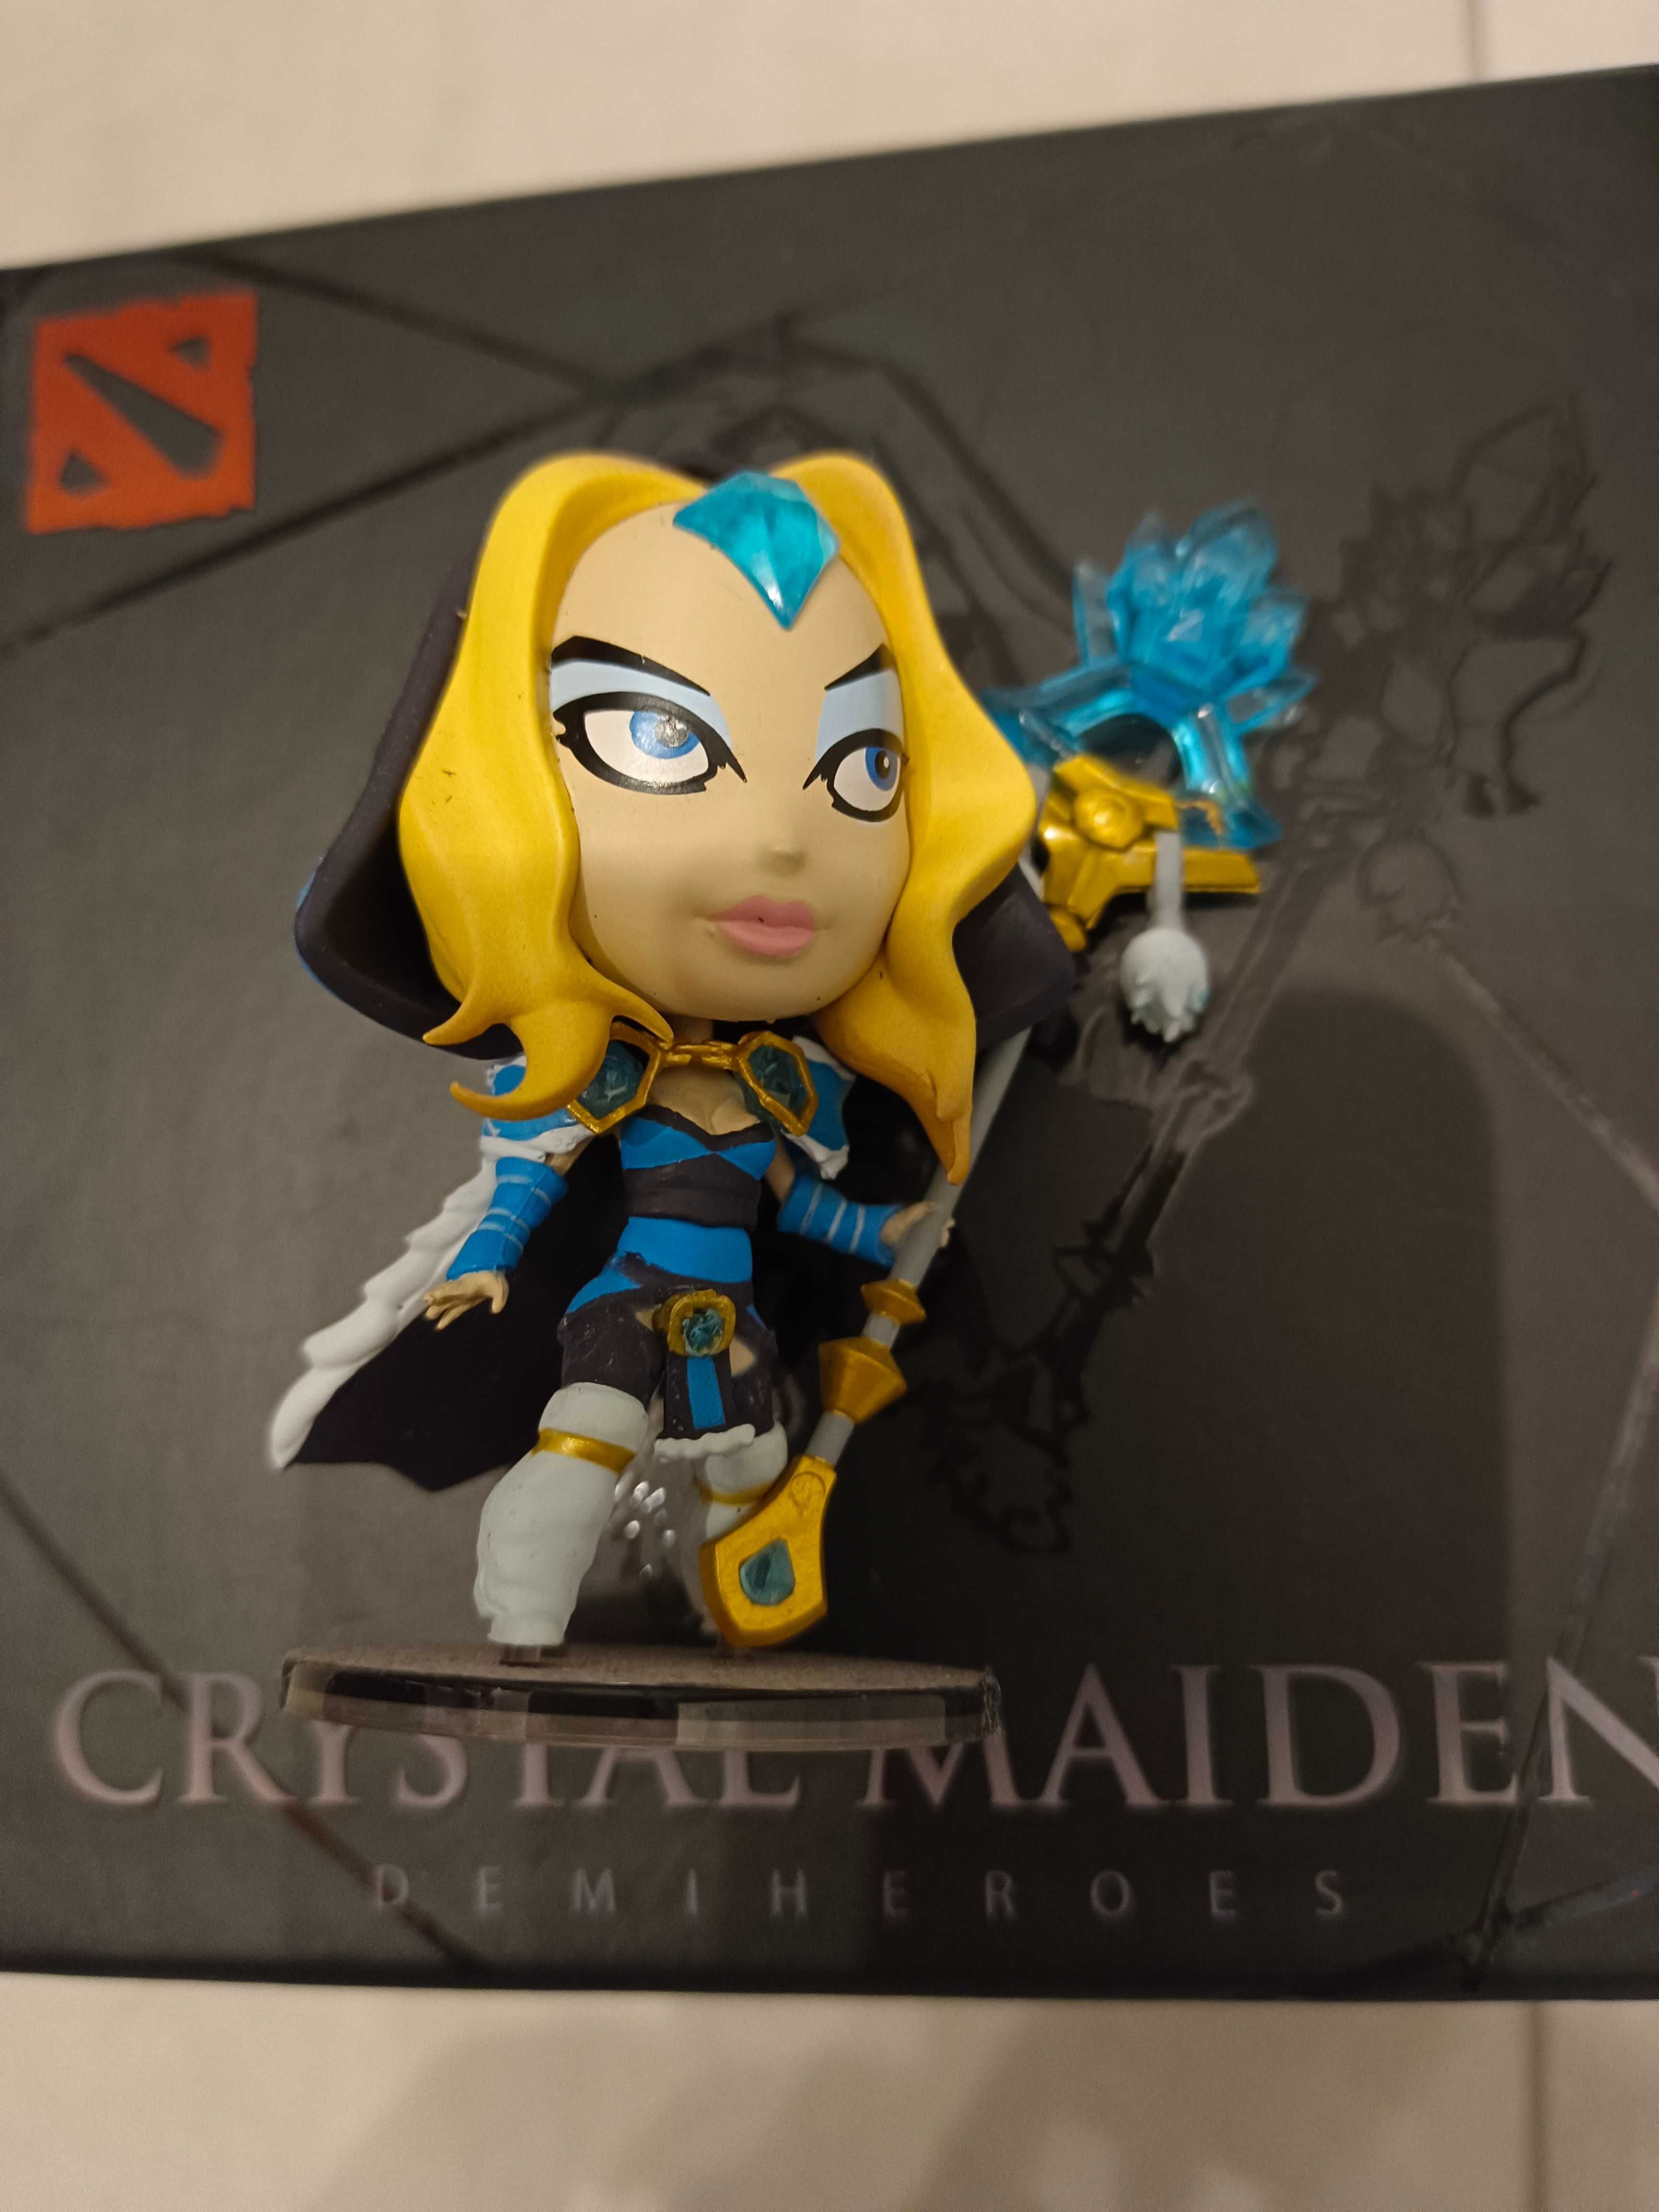 Crystal Maiden demiheroes Dota 2